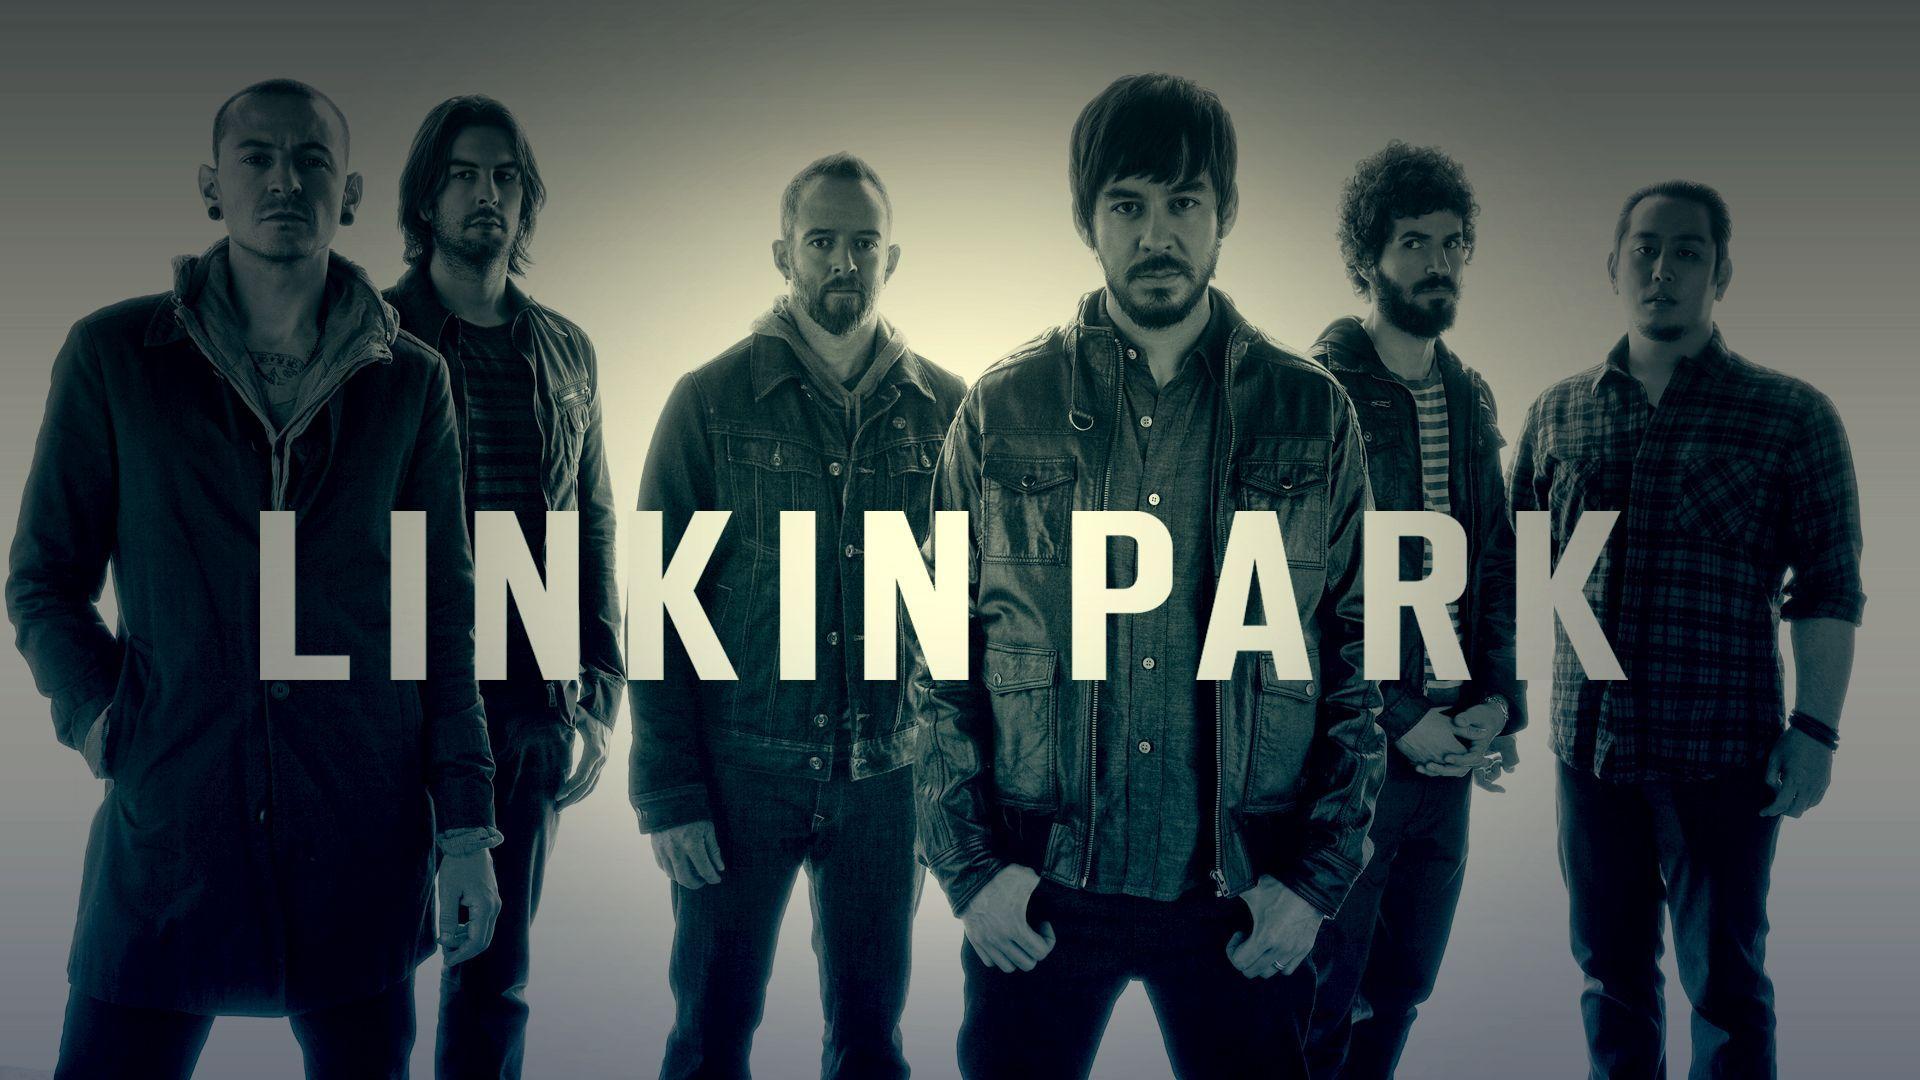 Linkin Park Wallpaper High Resolution